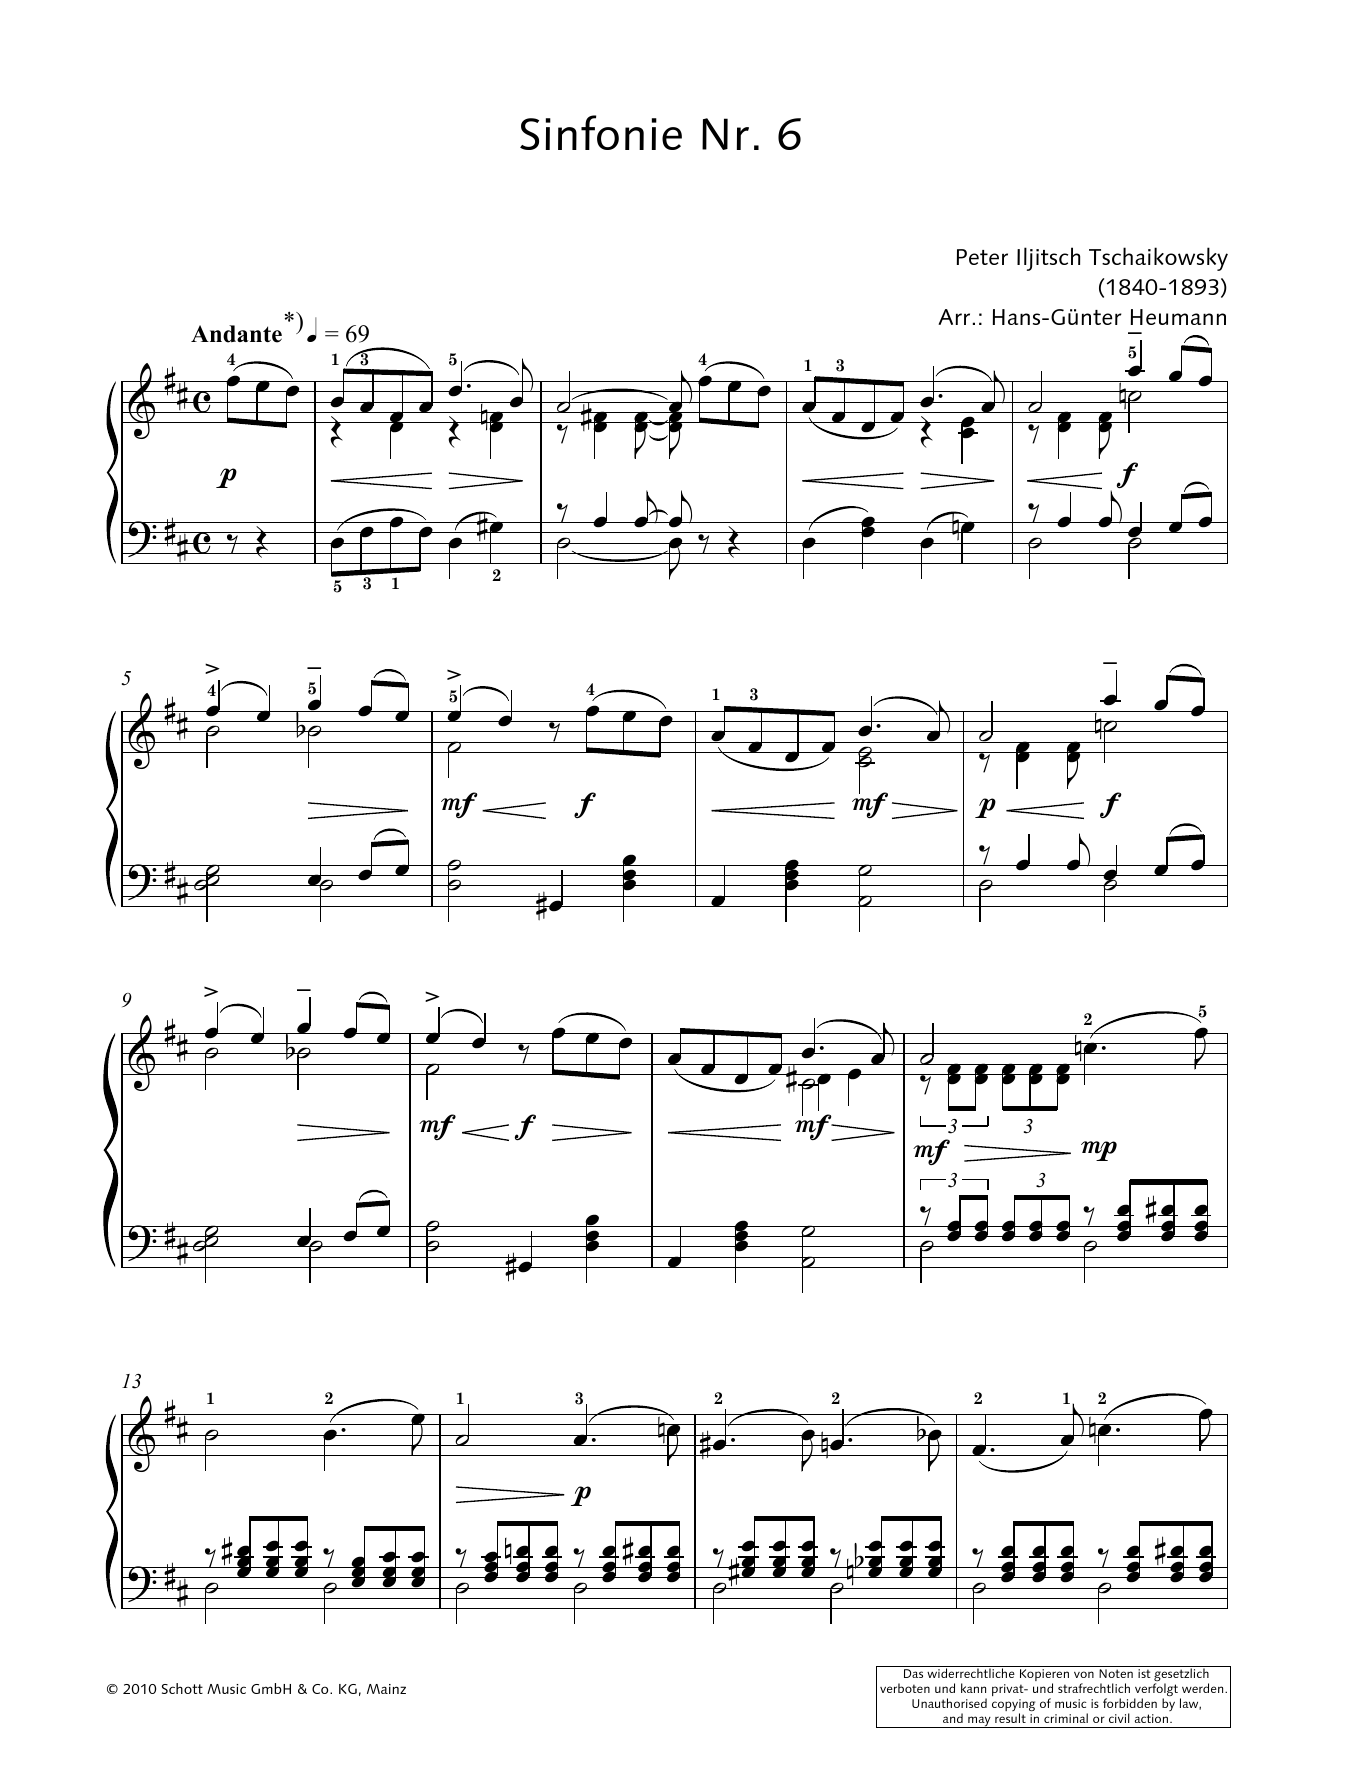 Download Hans-Gunter Heumann Symphony No. 6 in B minor Sheet Music